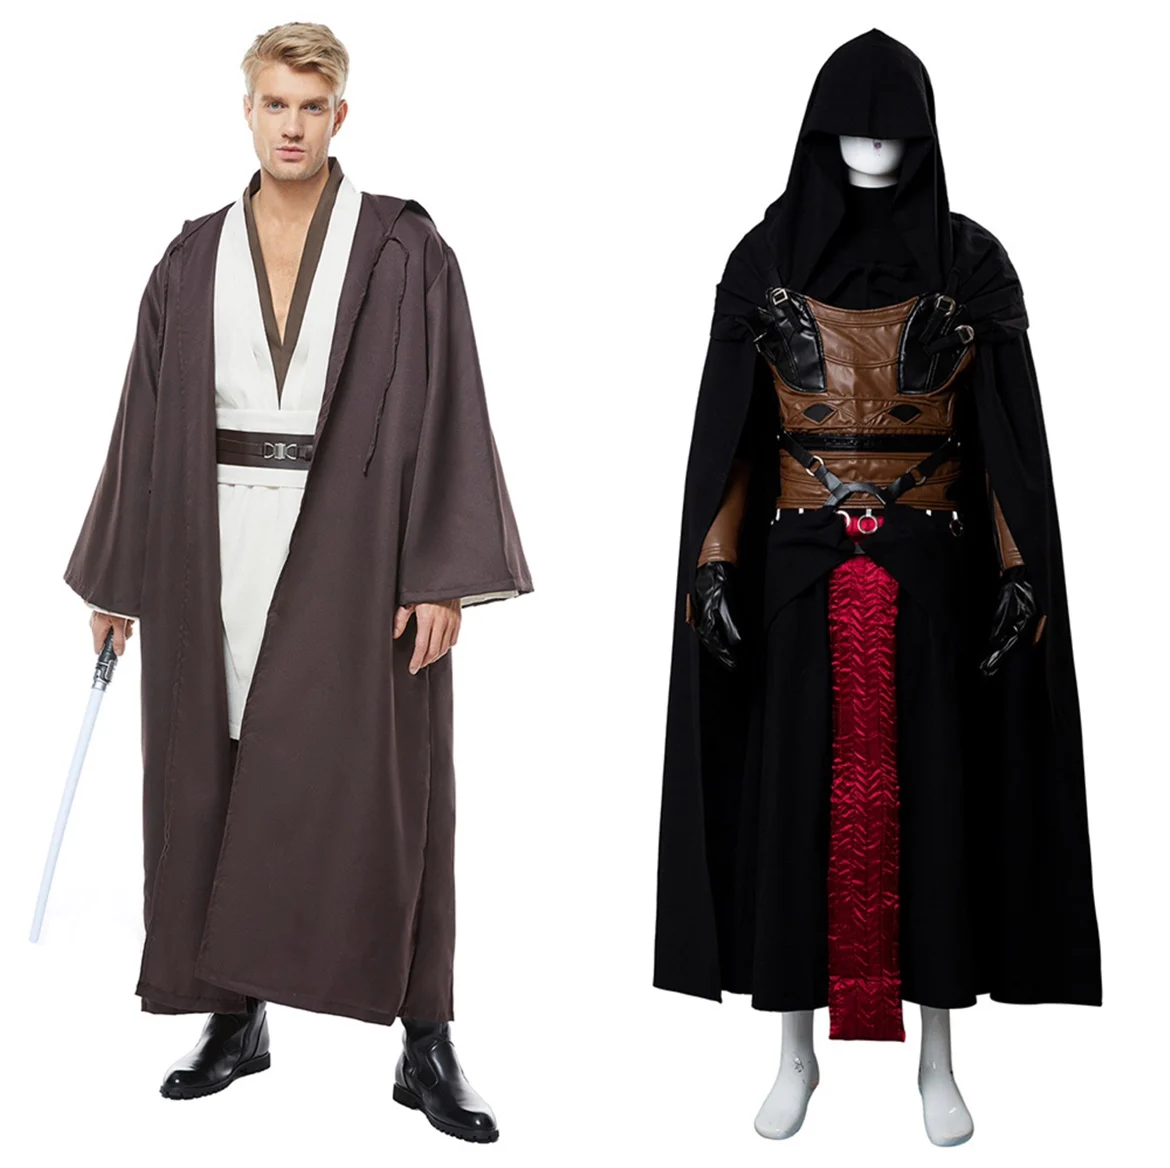 Movie Obi-Wan Kenobi /Darth Revan Cosplay Costume Outfit Cape Jedi TUNIC Robe Halloween Cosplay Costume For Men